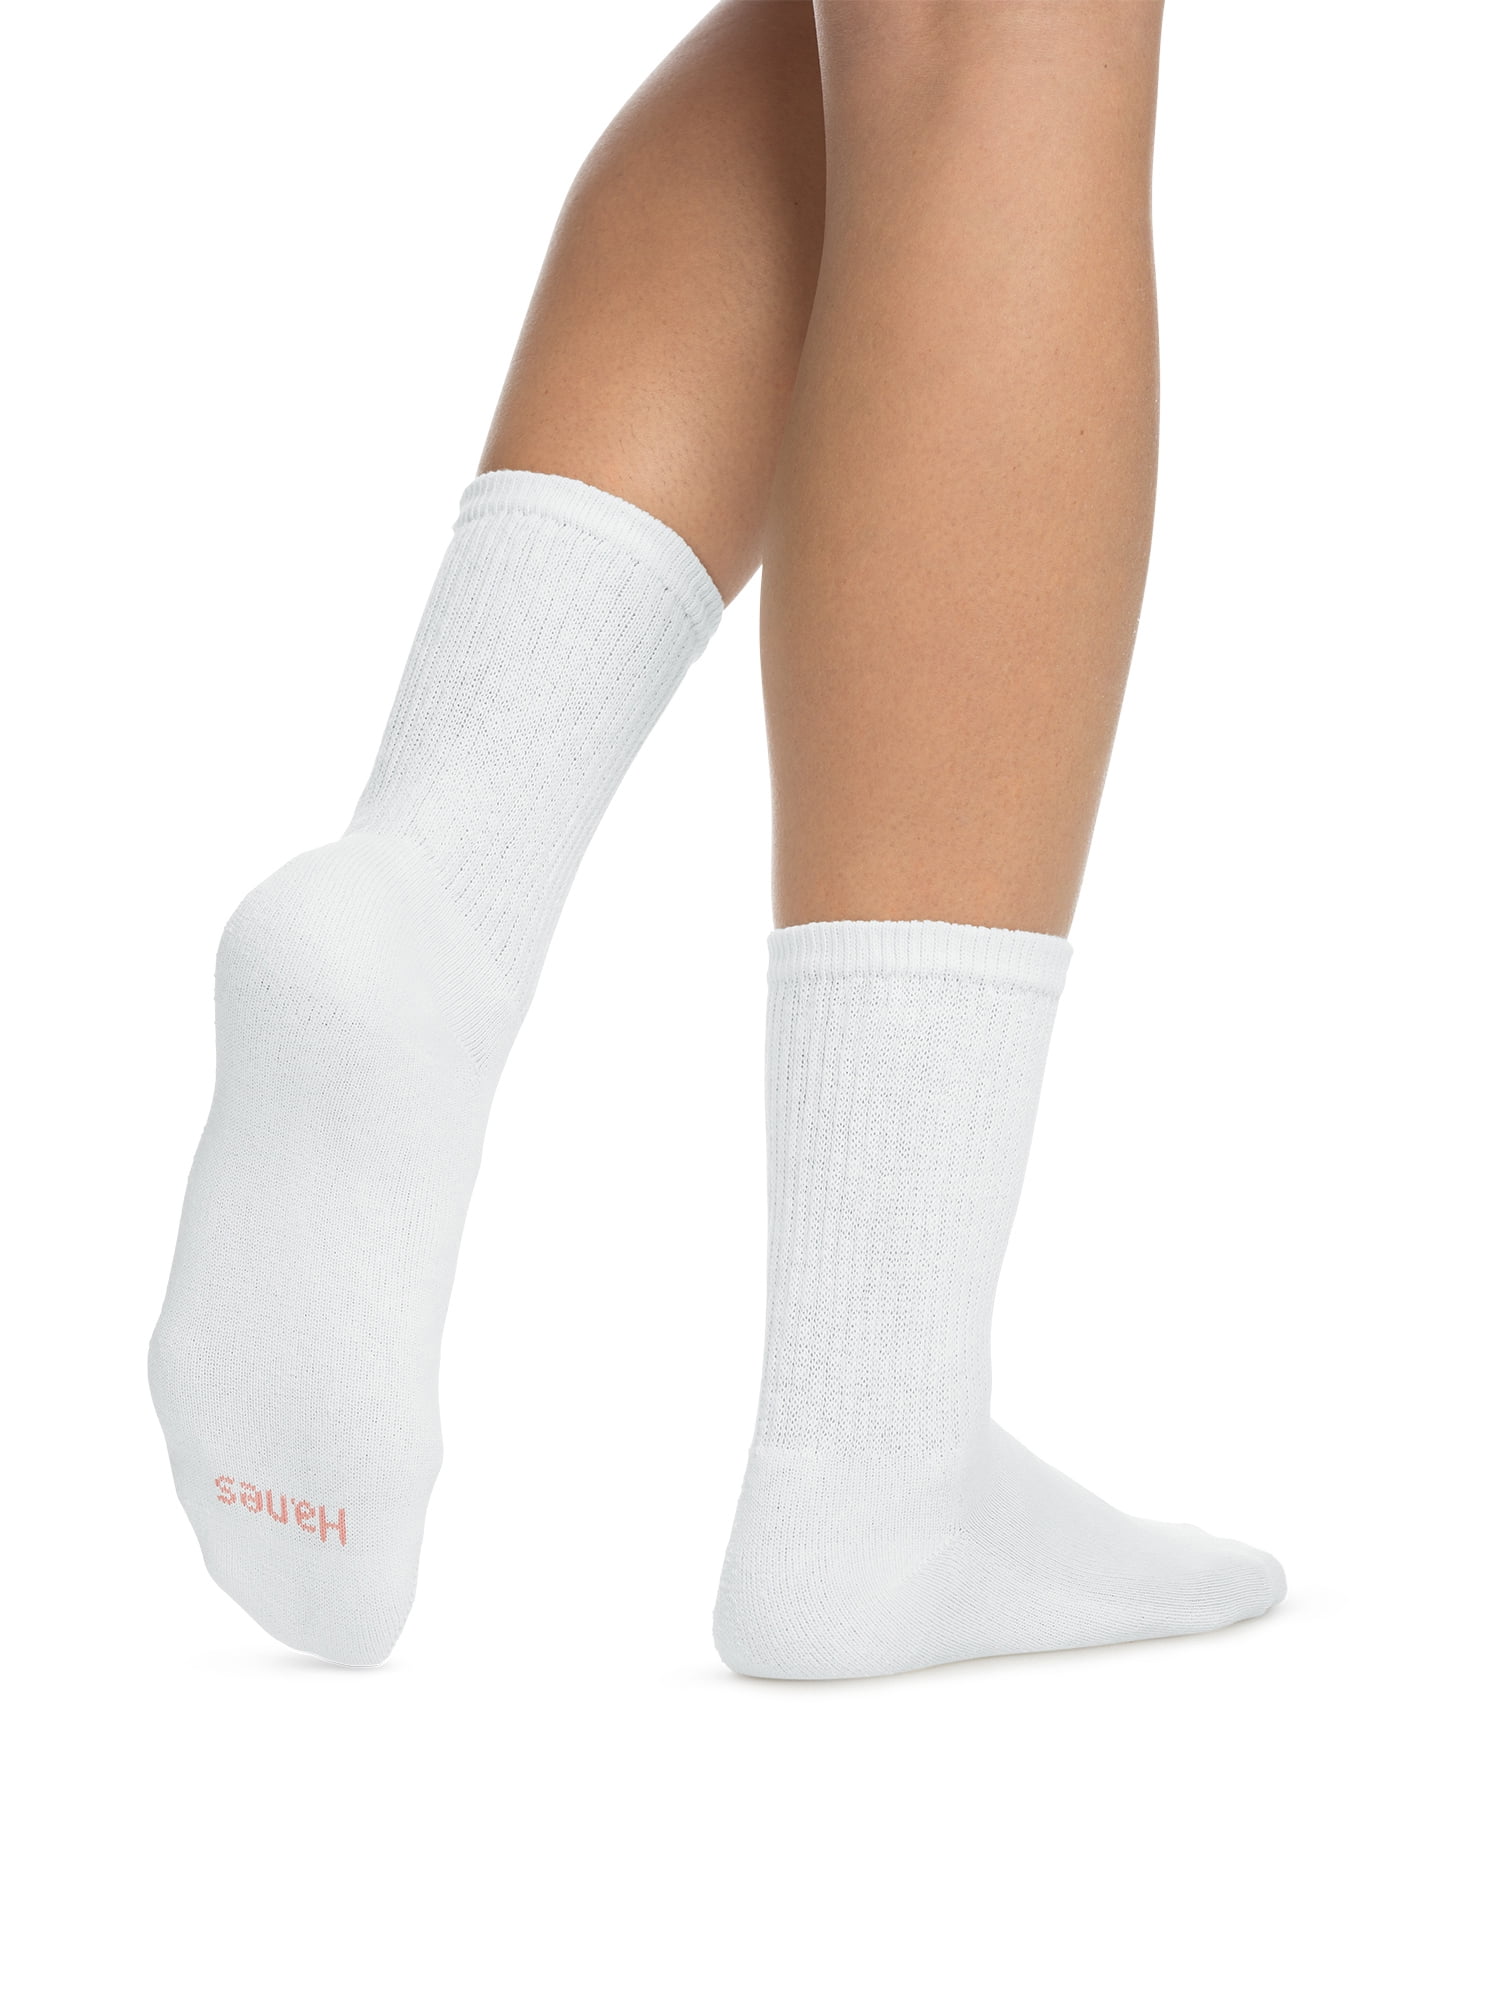 Womens comfortblend crew socks, 6 pair - Walmart.com